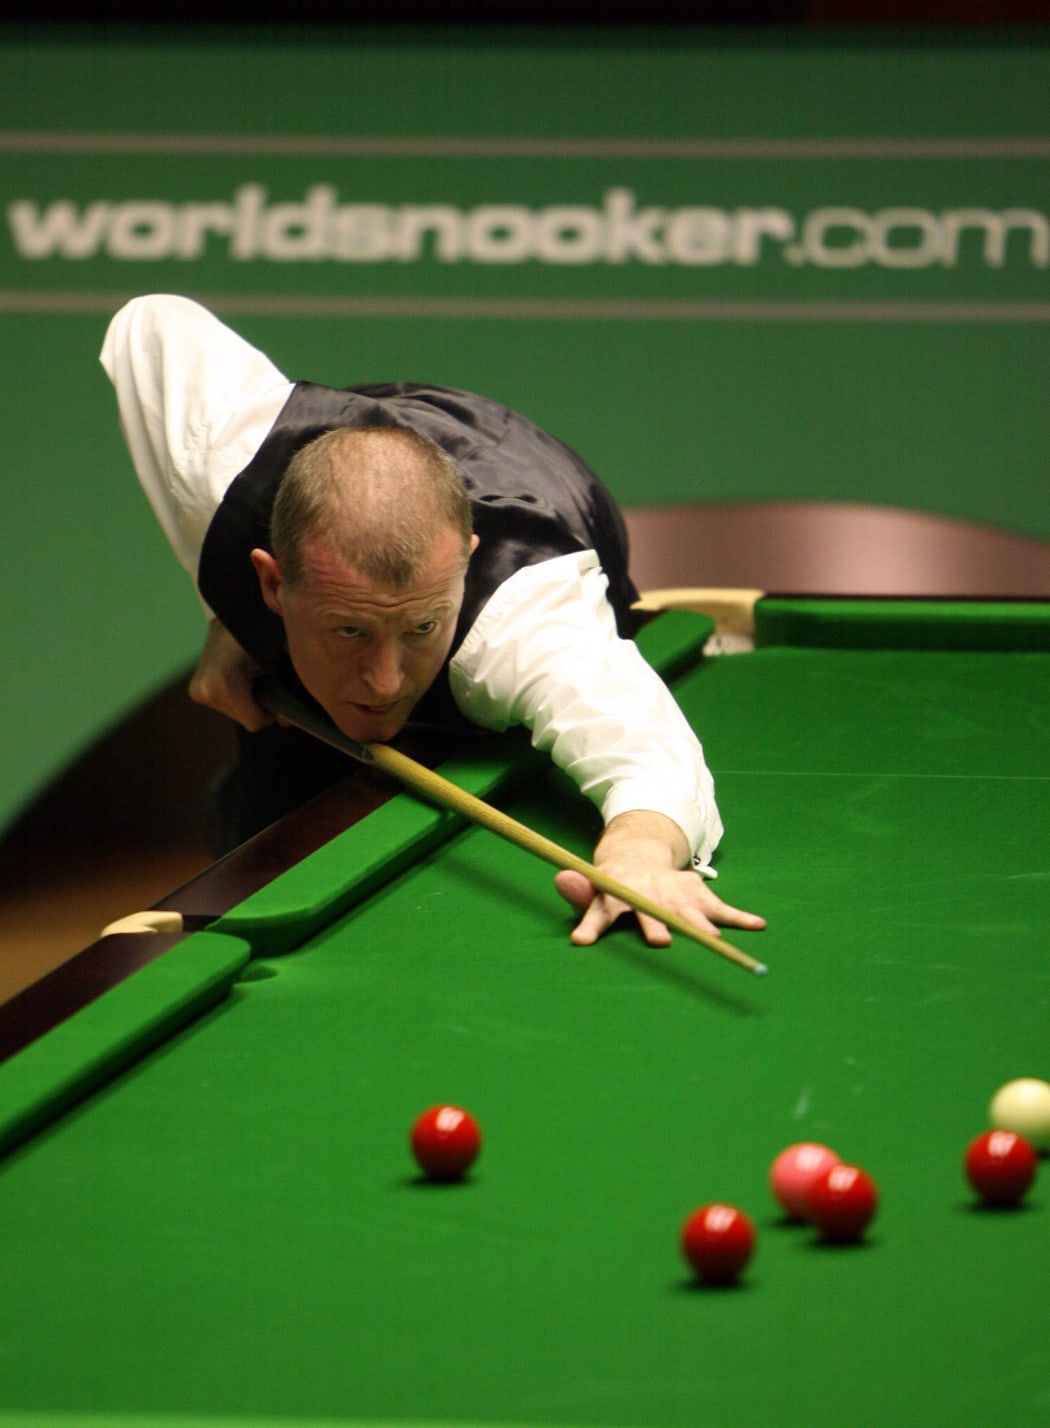 Former world snooker champion Steve Davis plays a shot during the World Snooker Championships at The Crucible 17 April 2006.